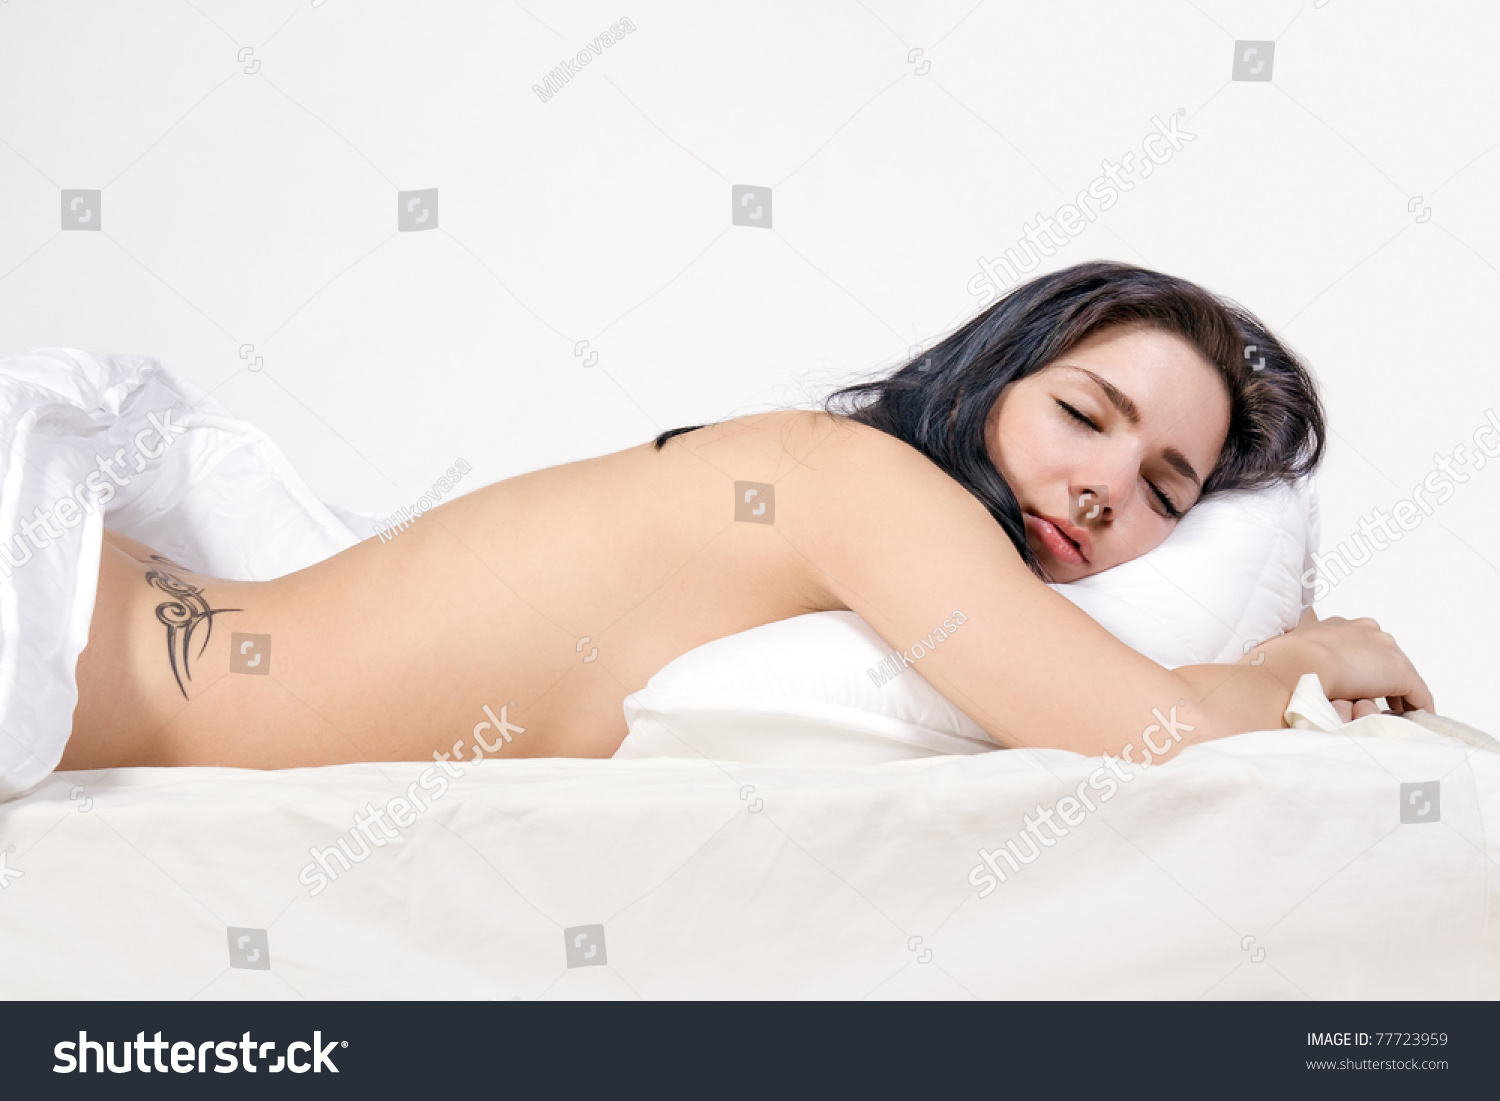 Most beautiful woman sleeping naked